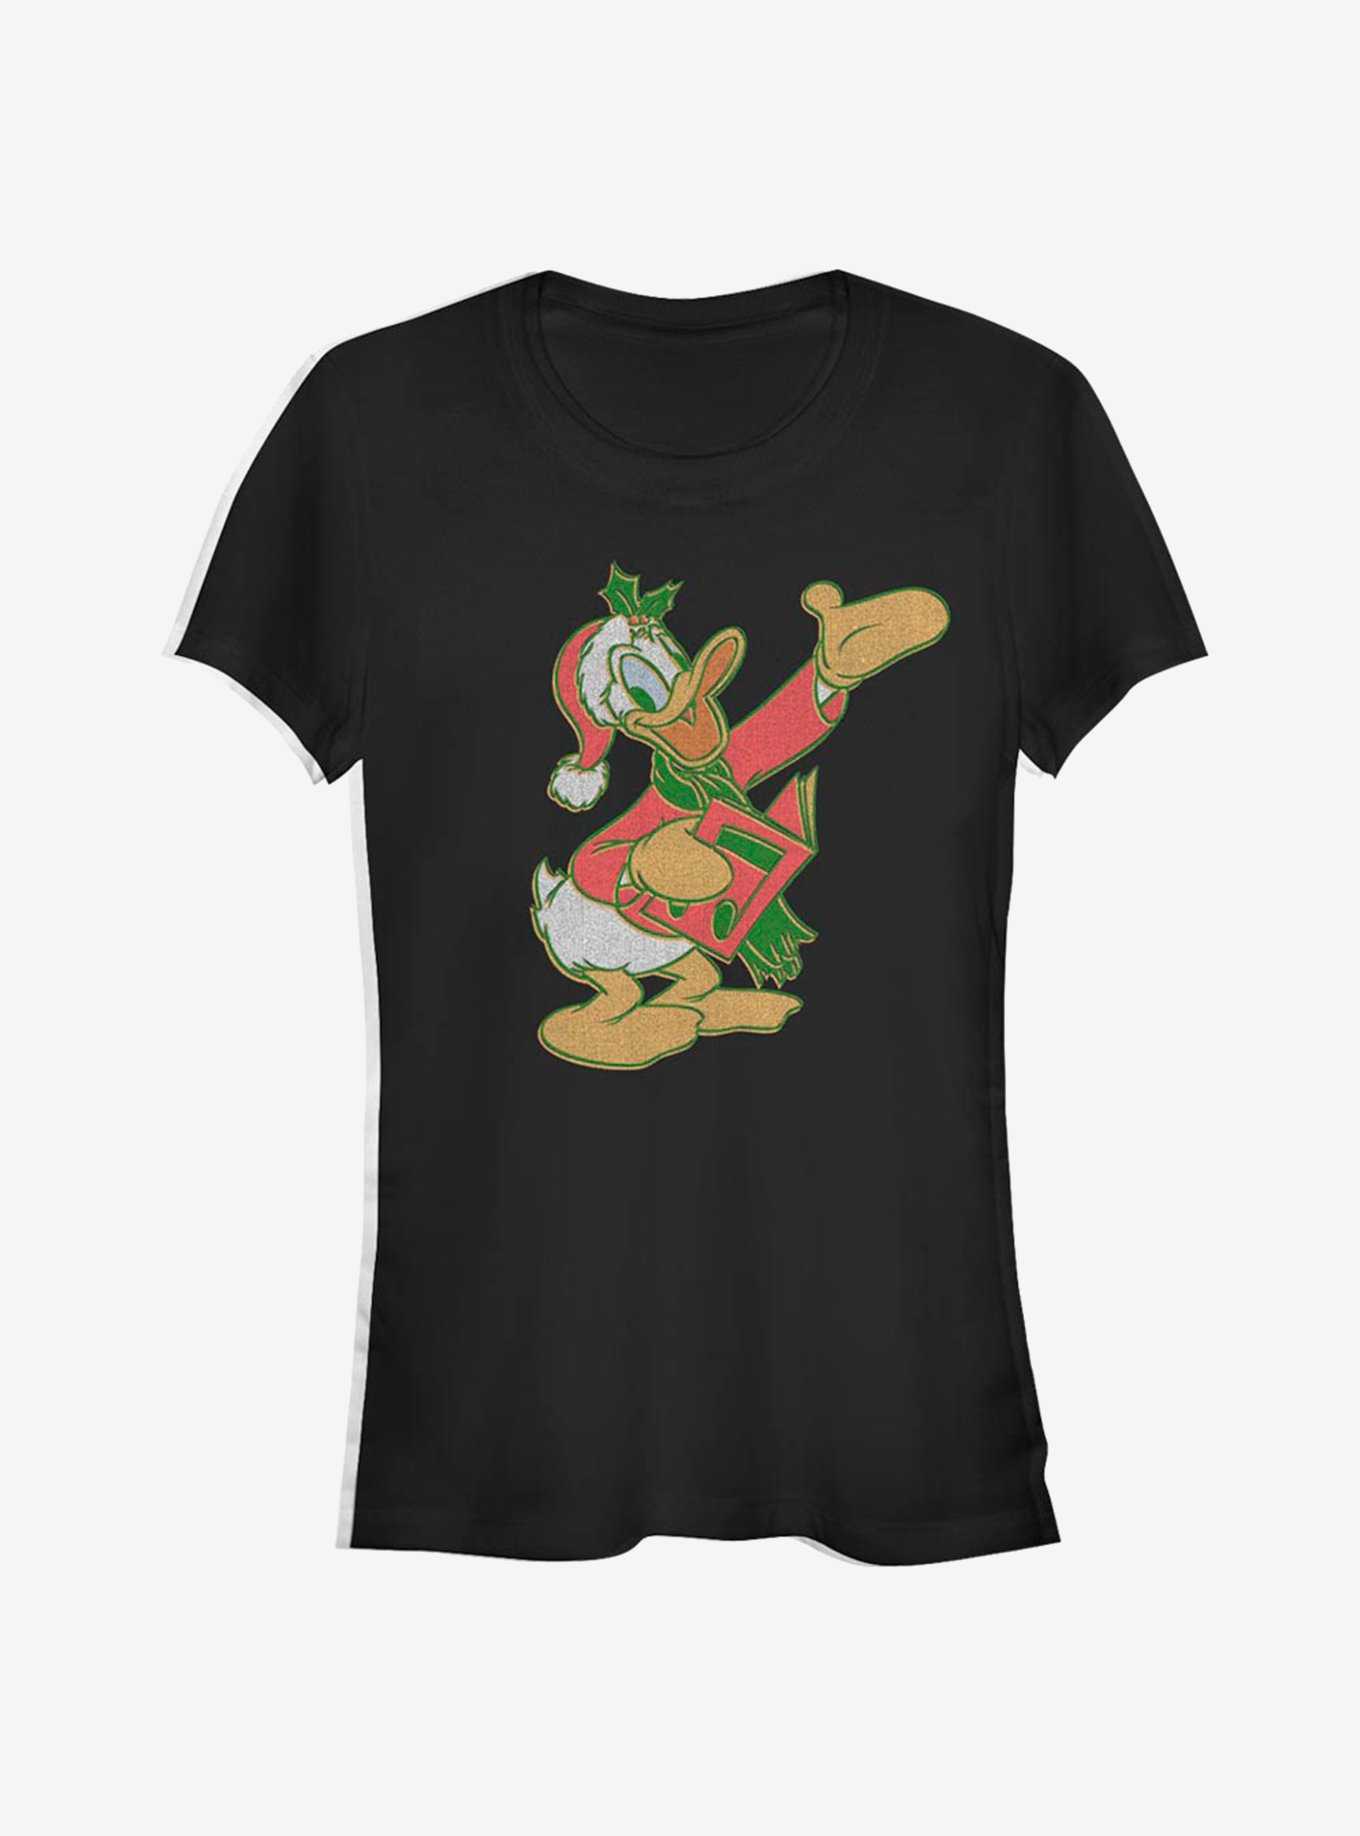 Disney Donald Duck Holiday Caroler Classic Girls T-Shirt, , hi-res